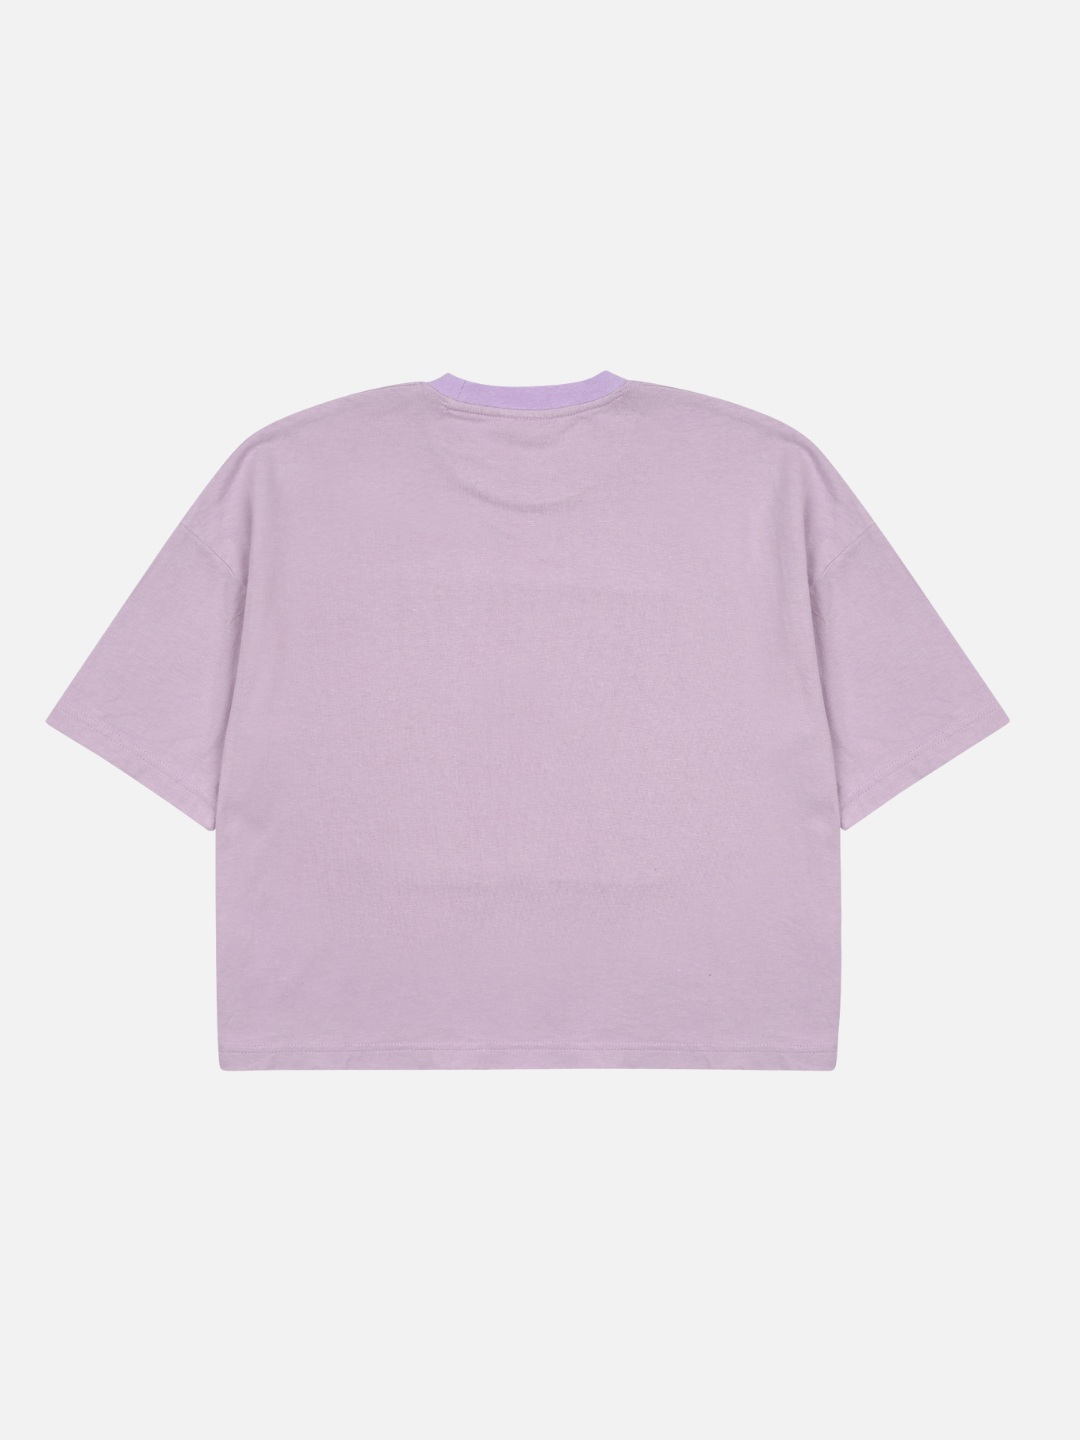 Back of Frame T-Shirt. Plain light purple background.